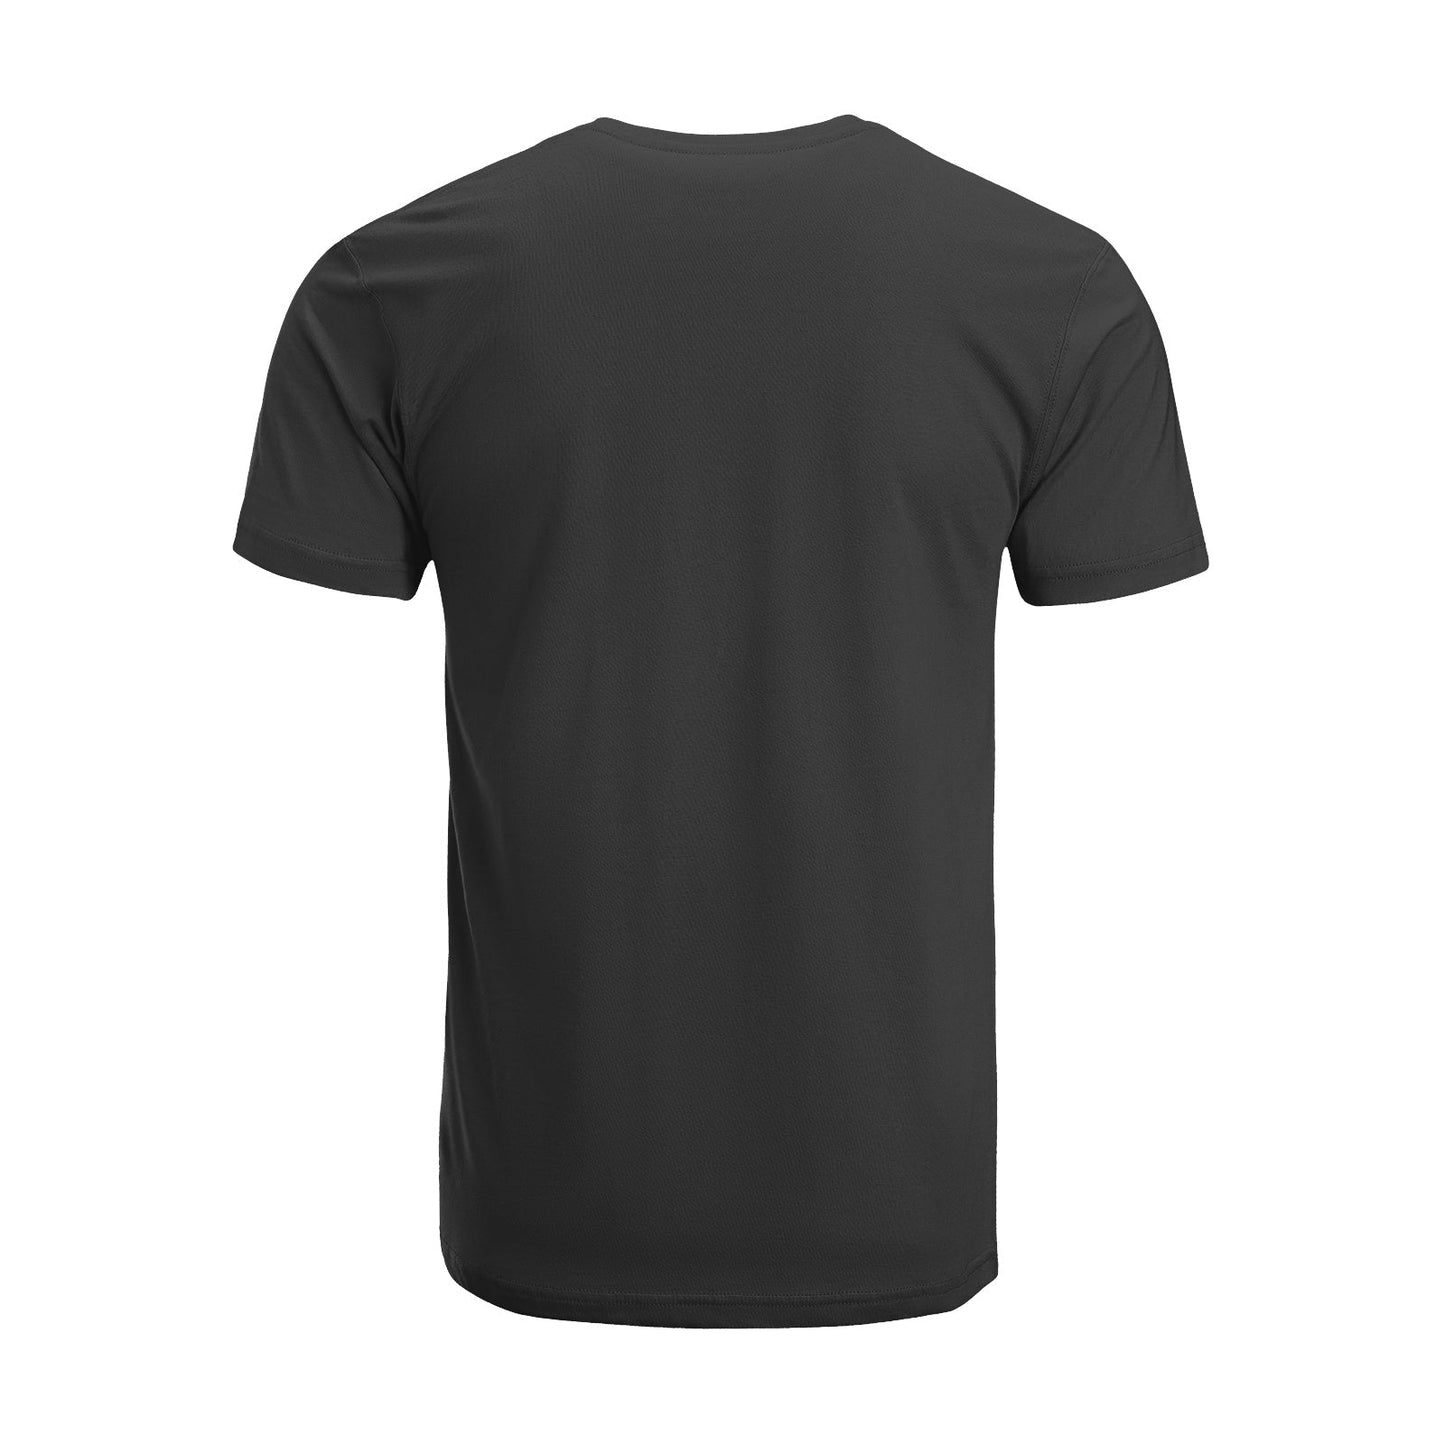 Unisex Short Sleeve Crew Neck Cotton Jersey T-Shirt CAT 11 - Tara-Outfits.com